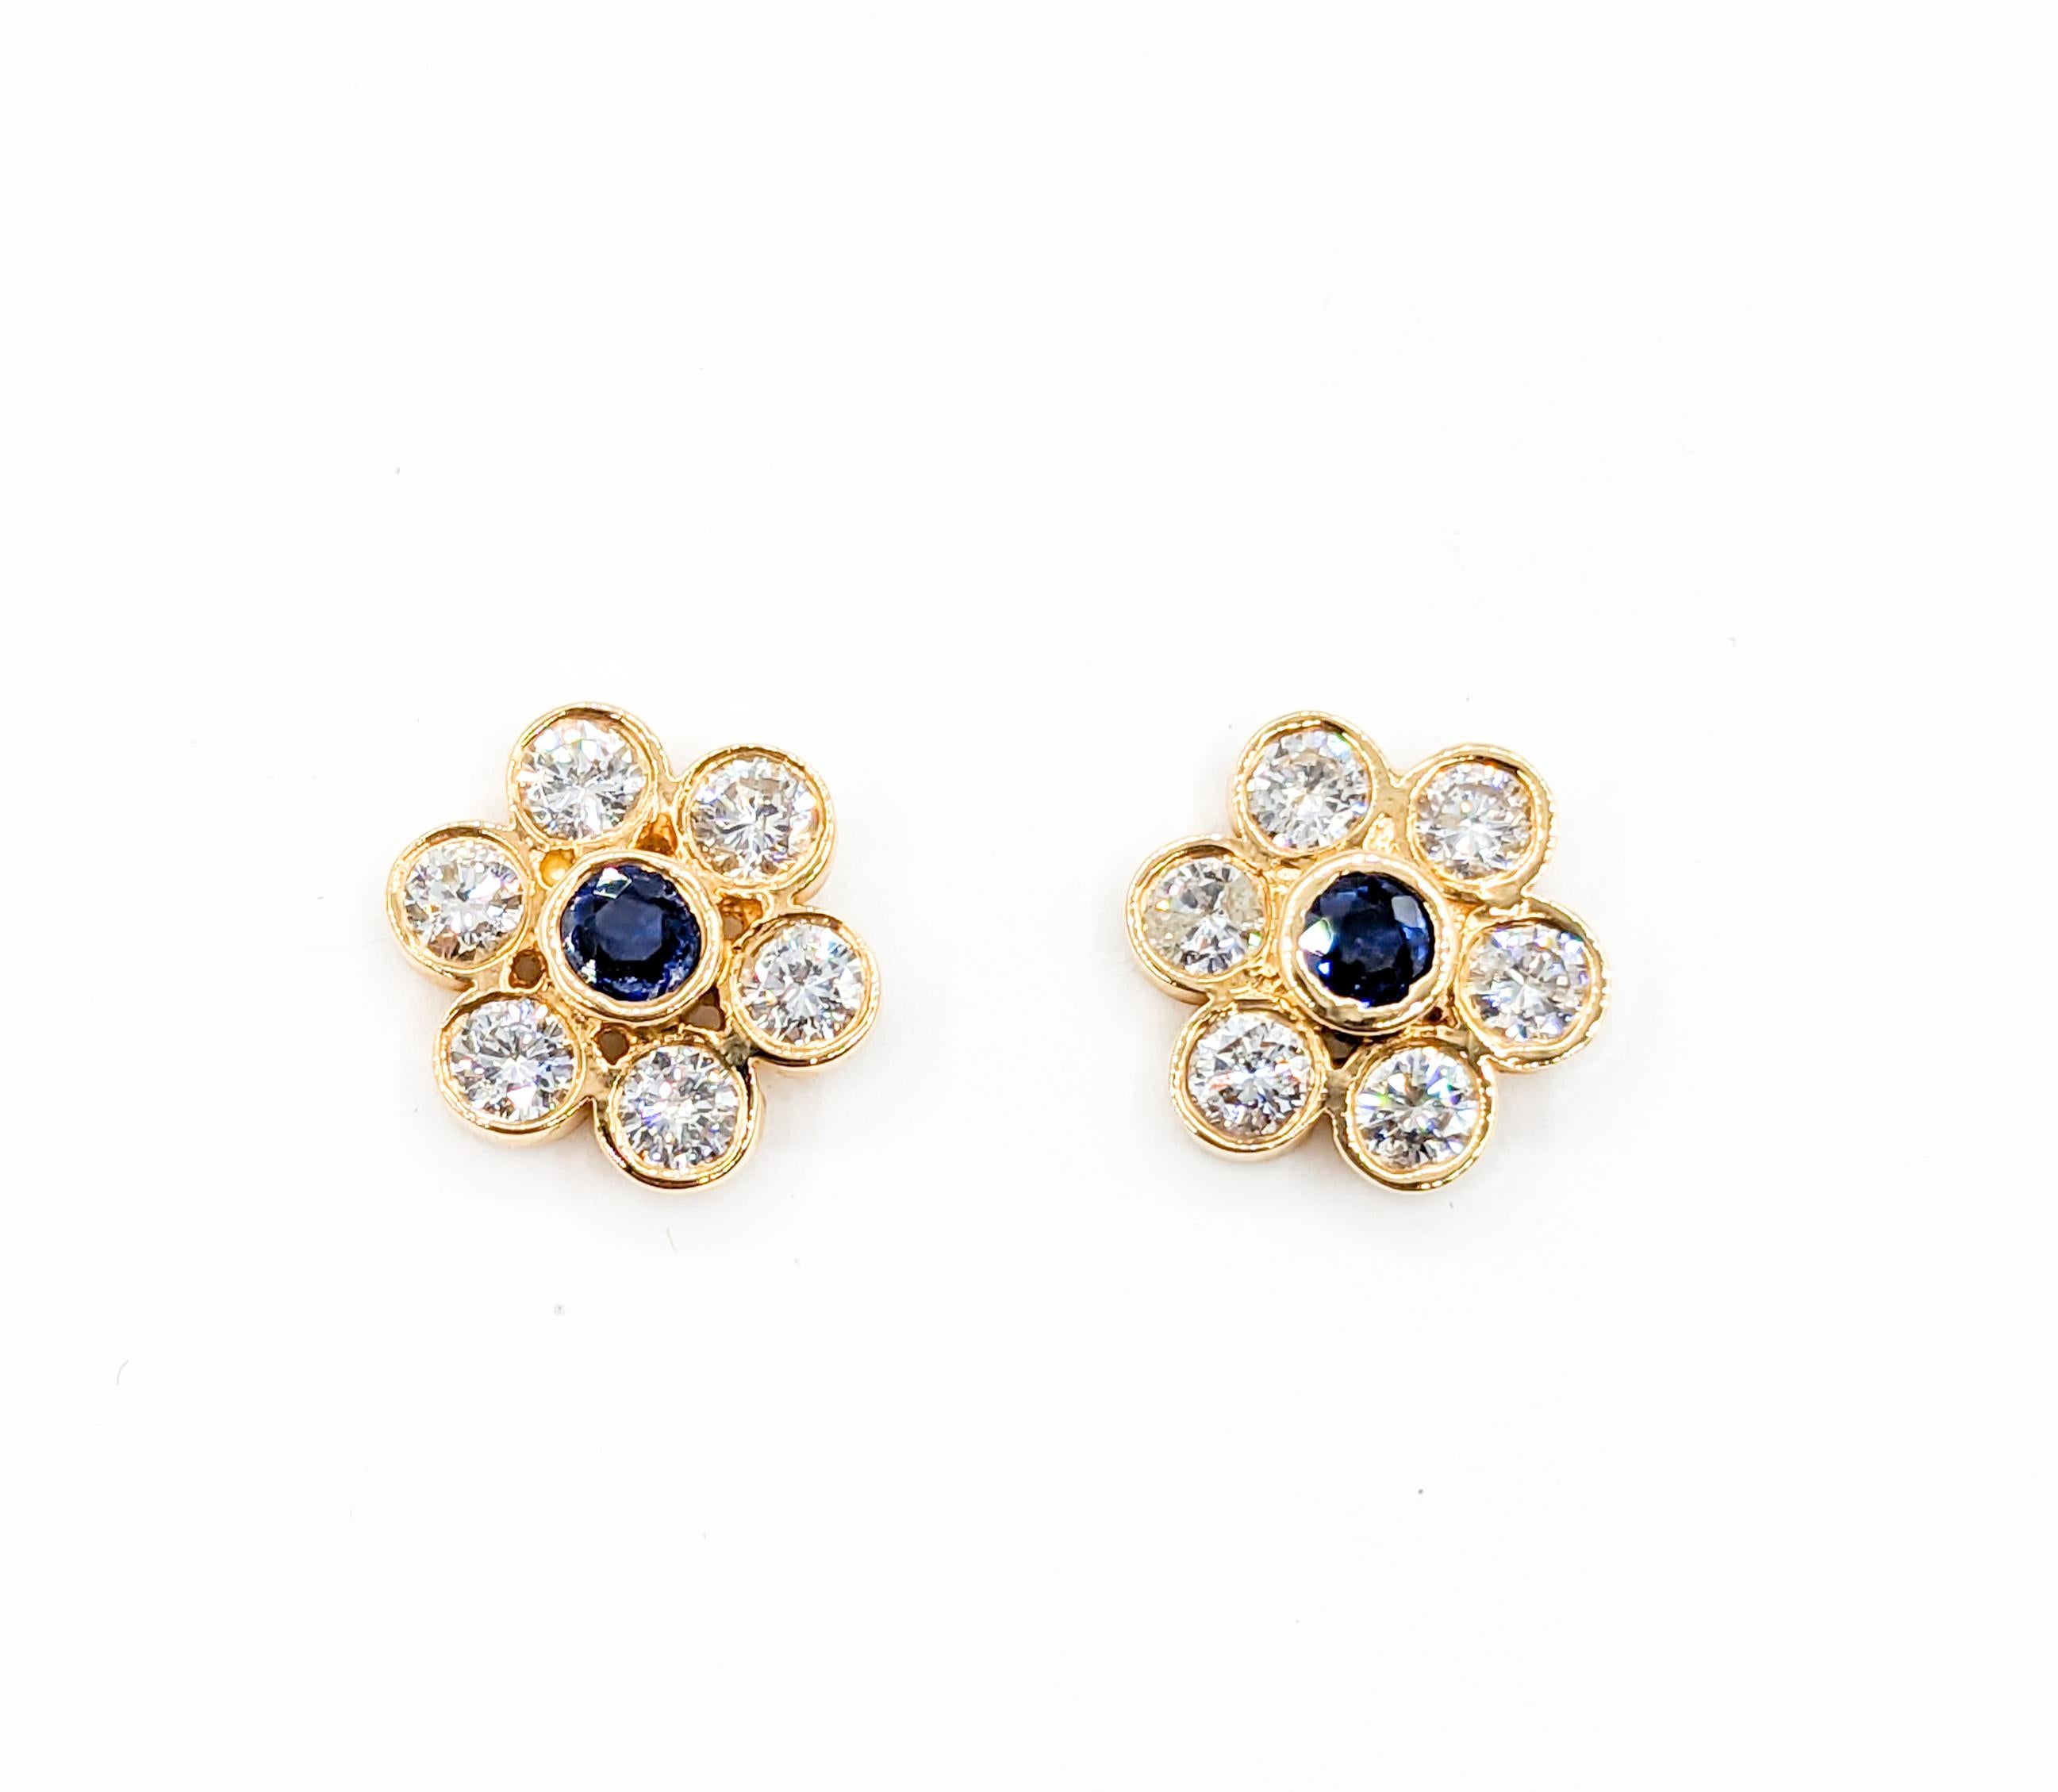 Vintage Diamond & Sapphire Floral Stud Earrings in 14K Gold For Sale 2